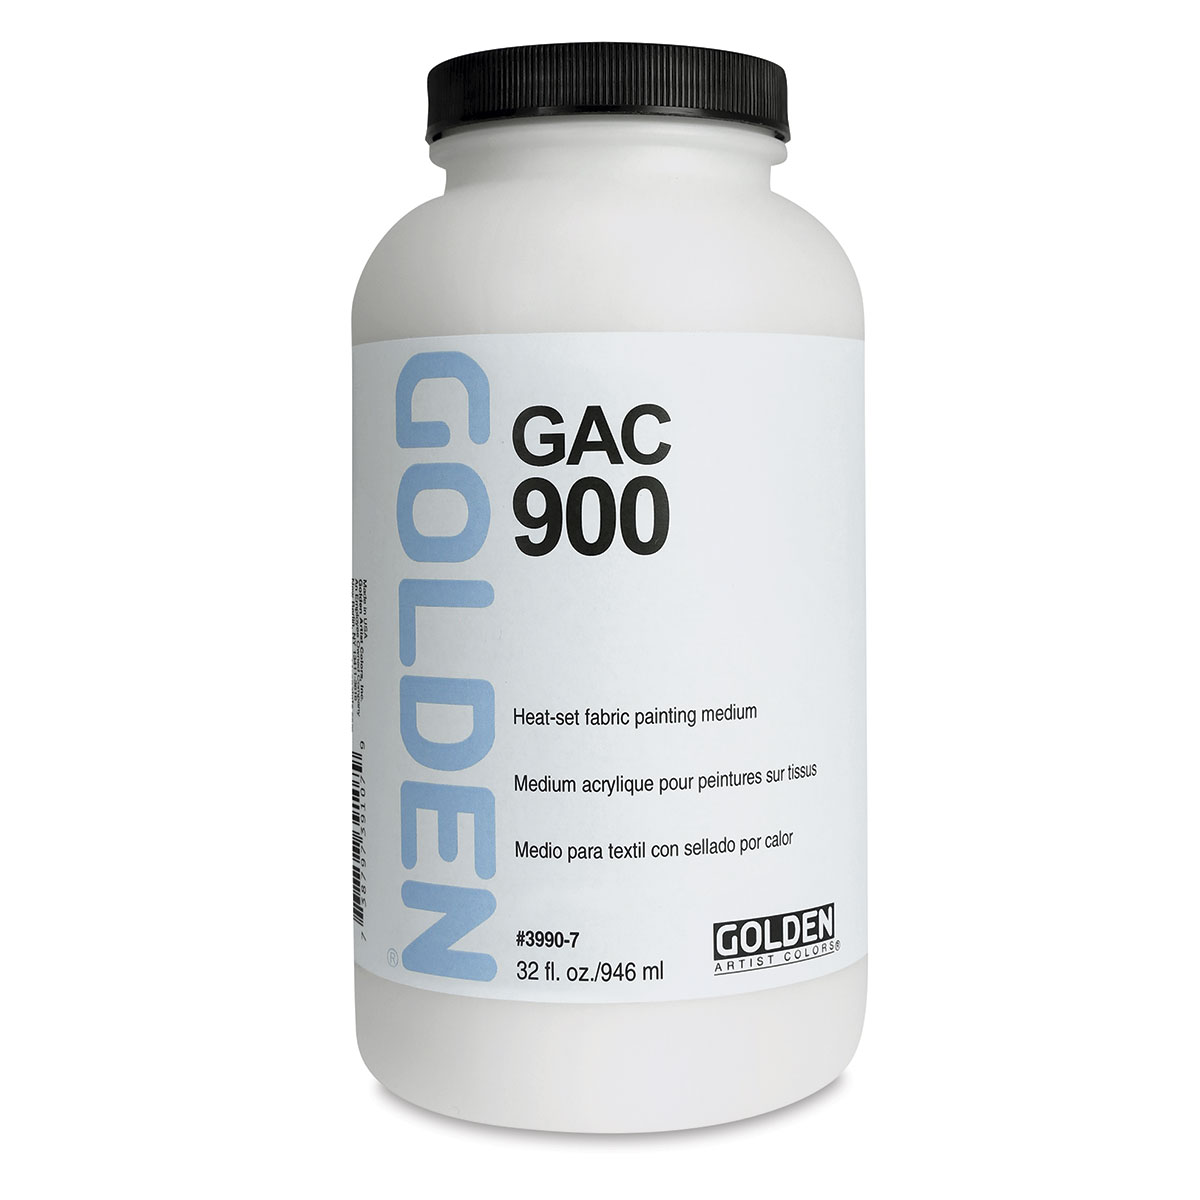 Golden GAC 900 (Heat Set) polimer akrylowy